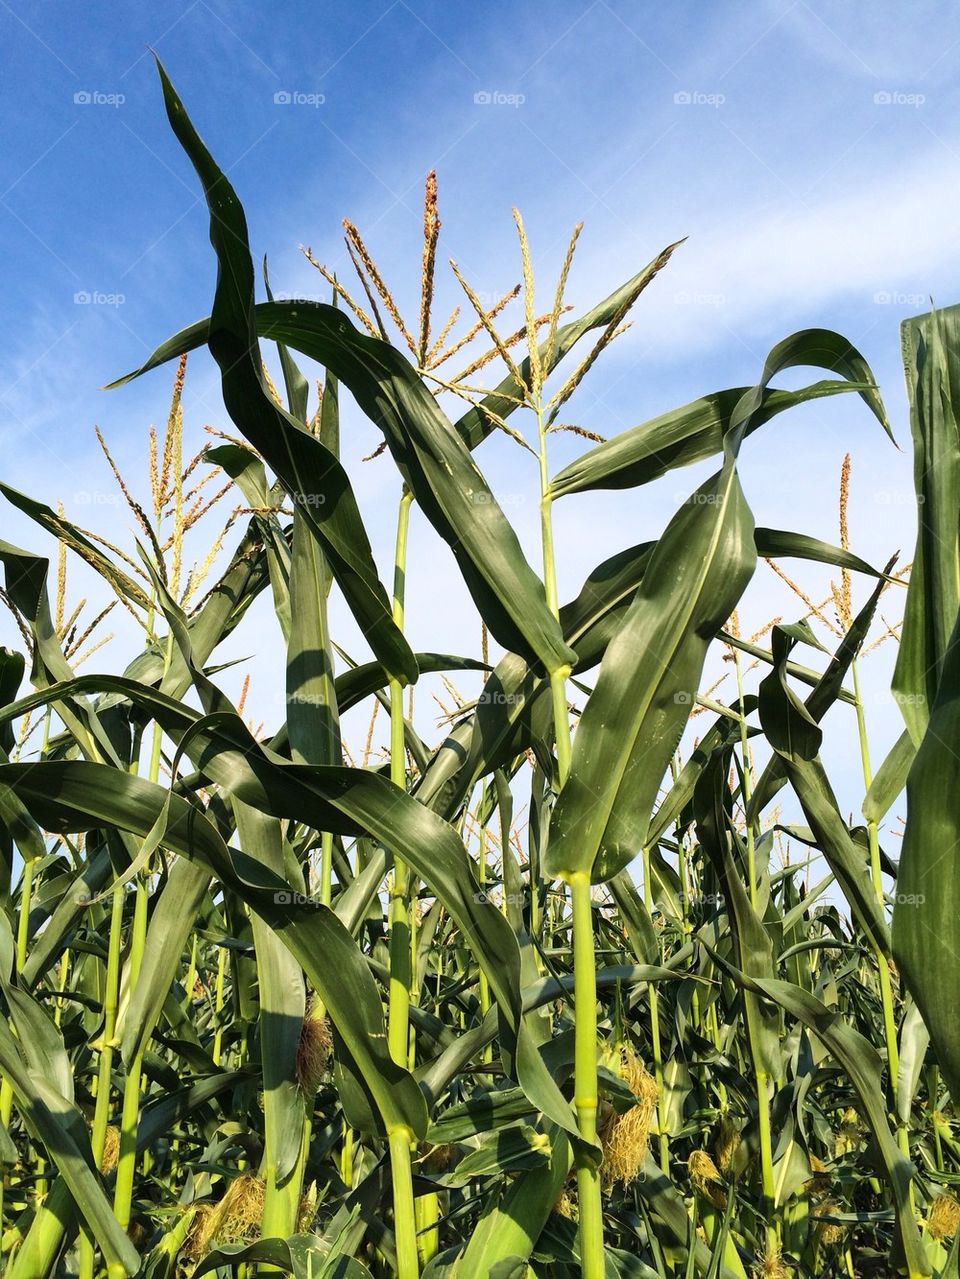 View of corn field